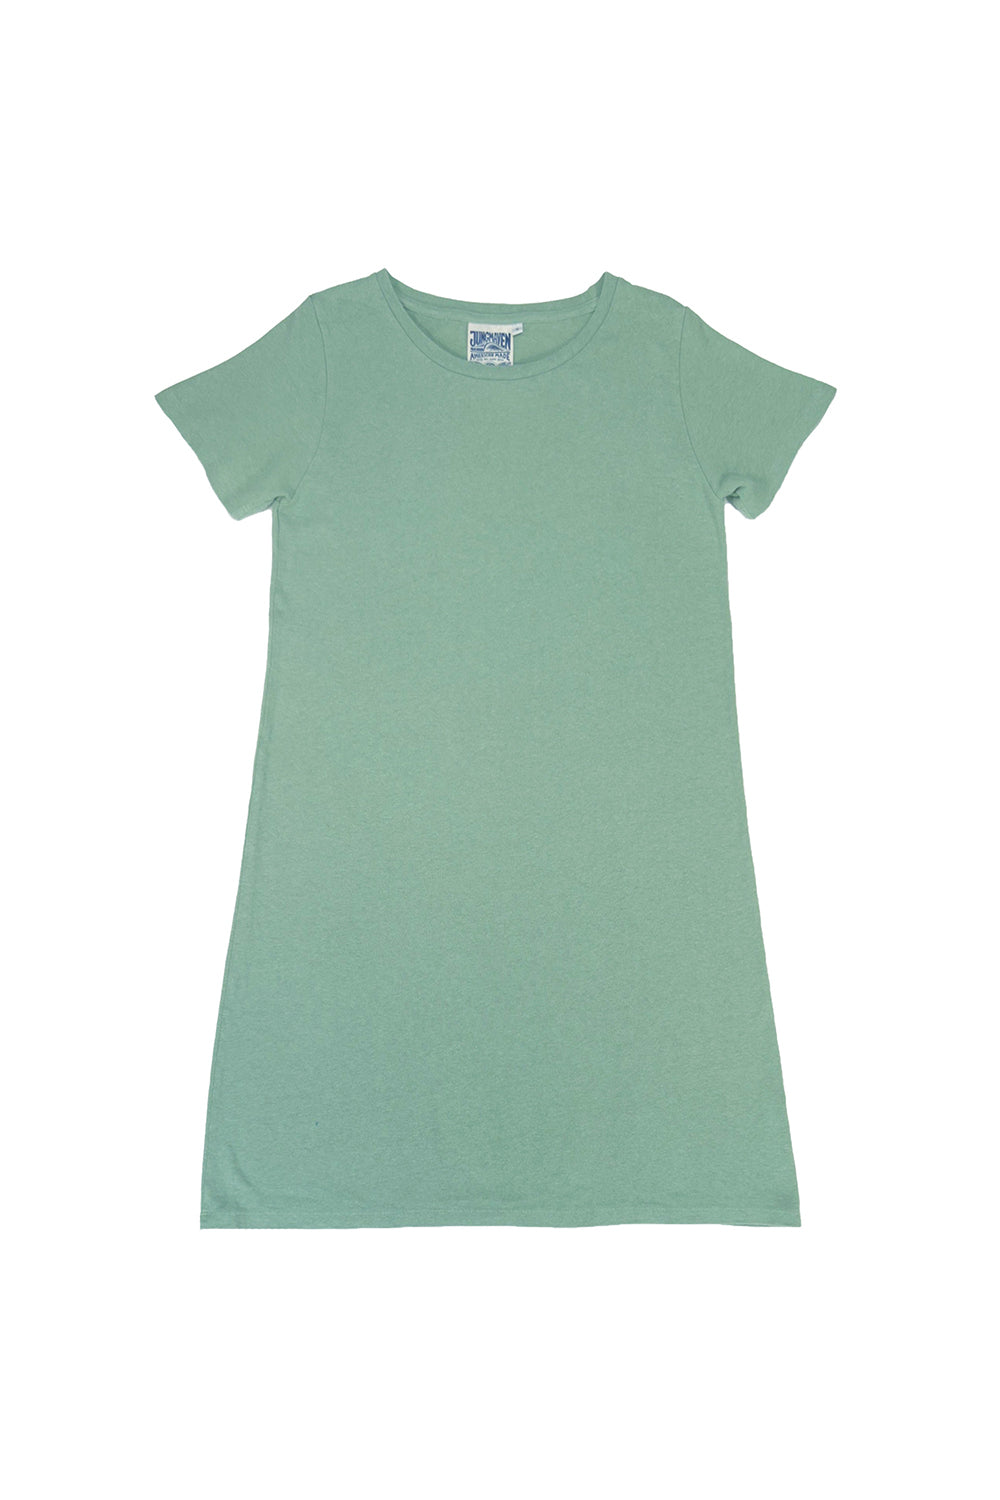 Rae Line Dress | Jungmaven Hemp Clothing & Accessories / Color: Sage Green